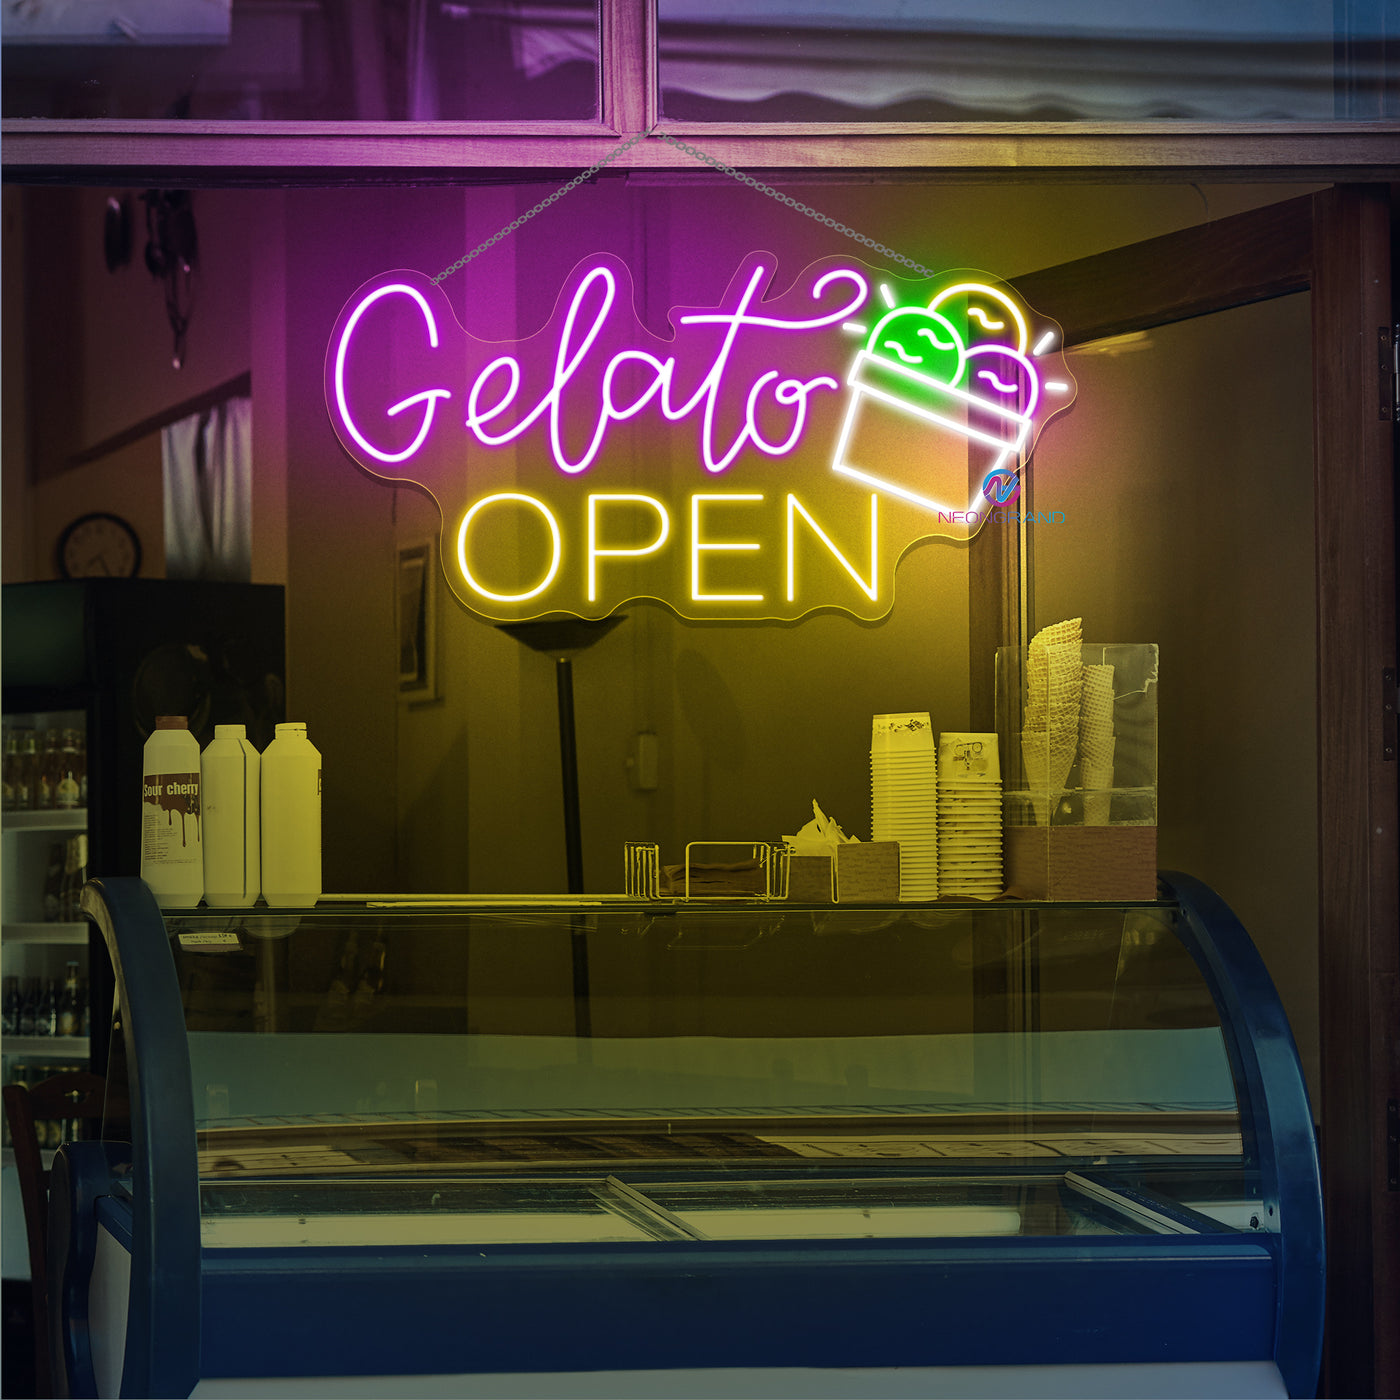 Gelato Open 24/7 Neon Sign Ice Cream Led Light